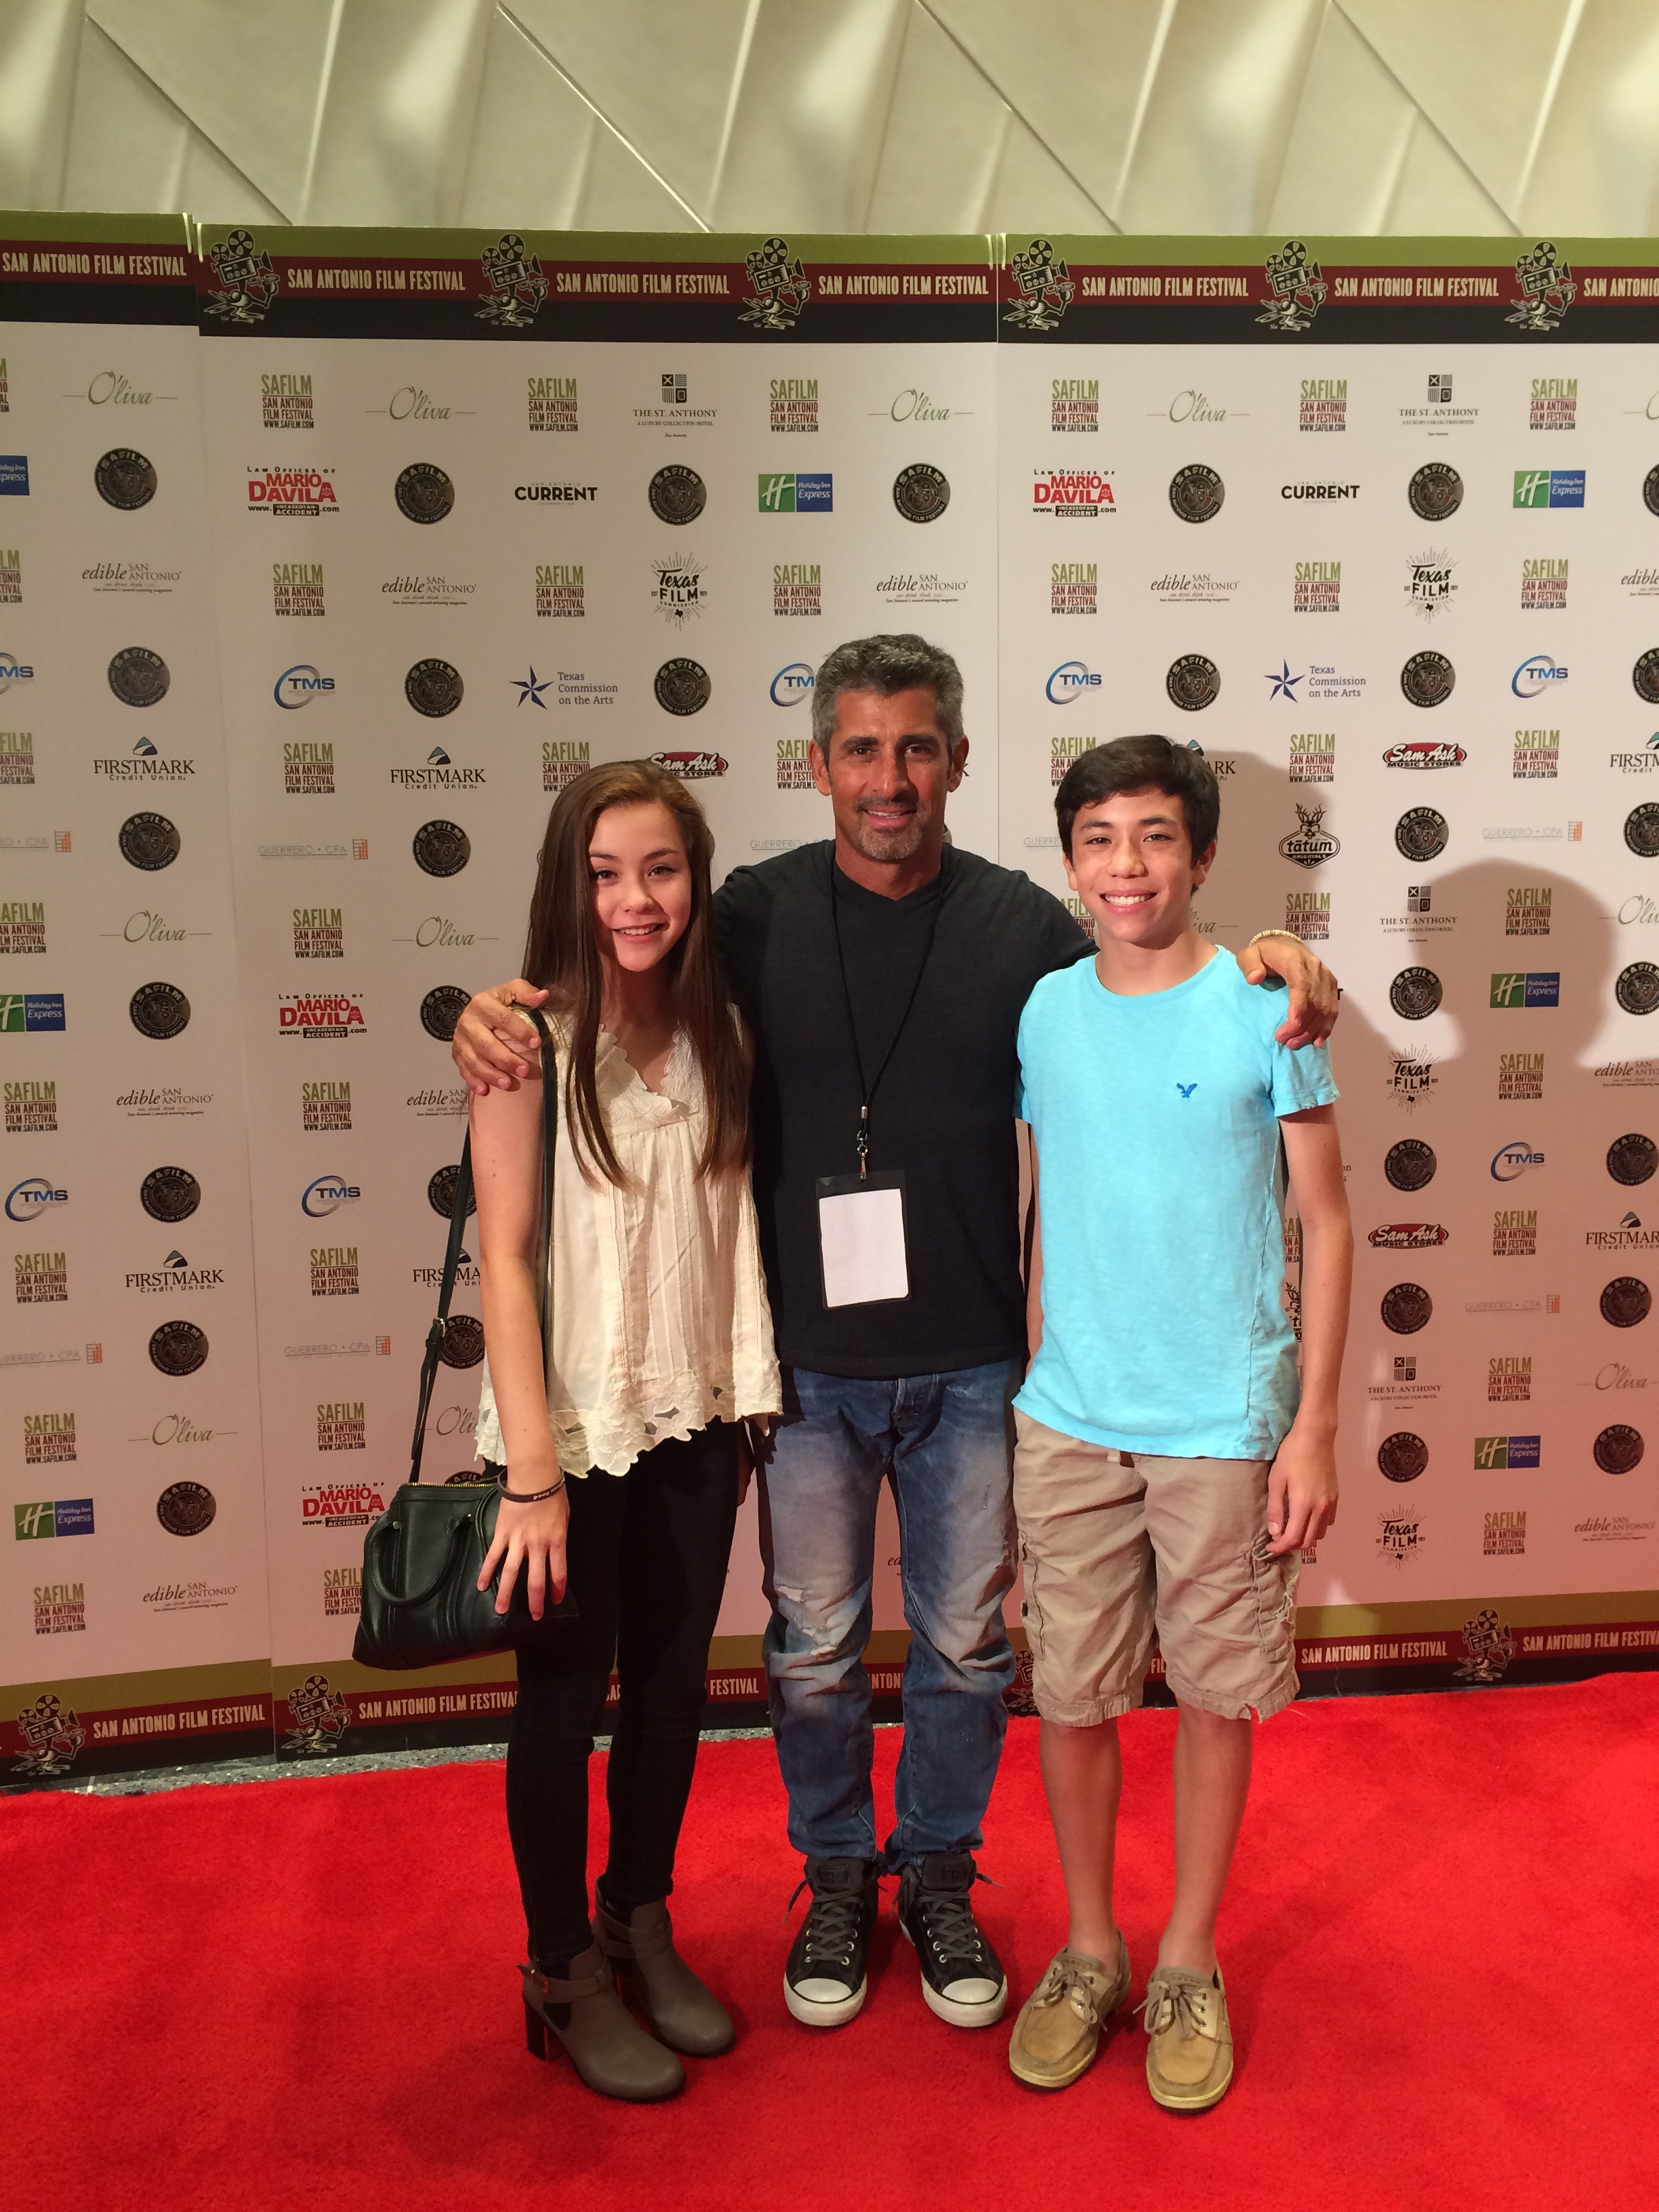 Jack with his twin sister and stuntman Corey Eubanks at the San Antonio Film Festival -2015